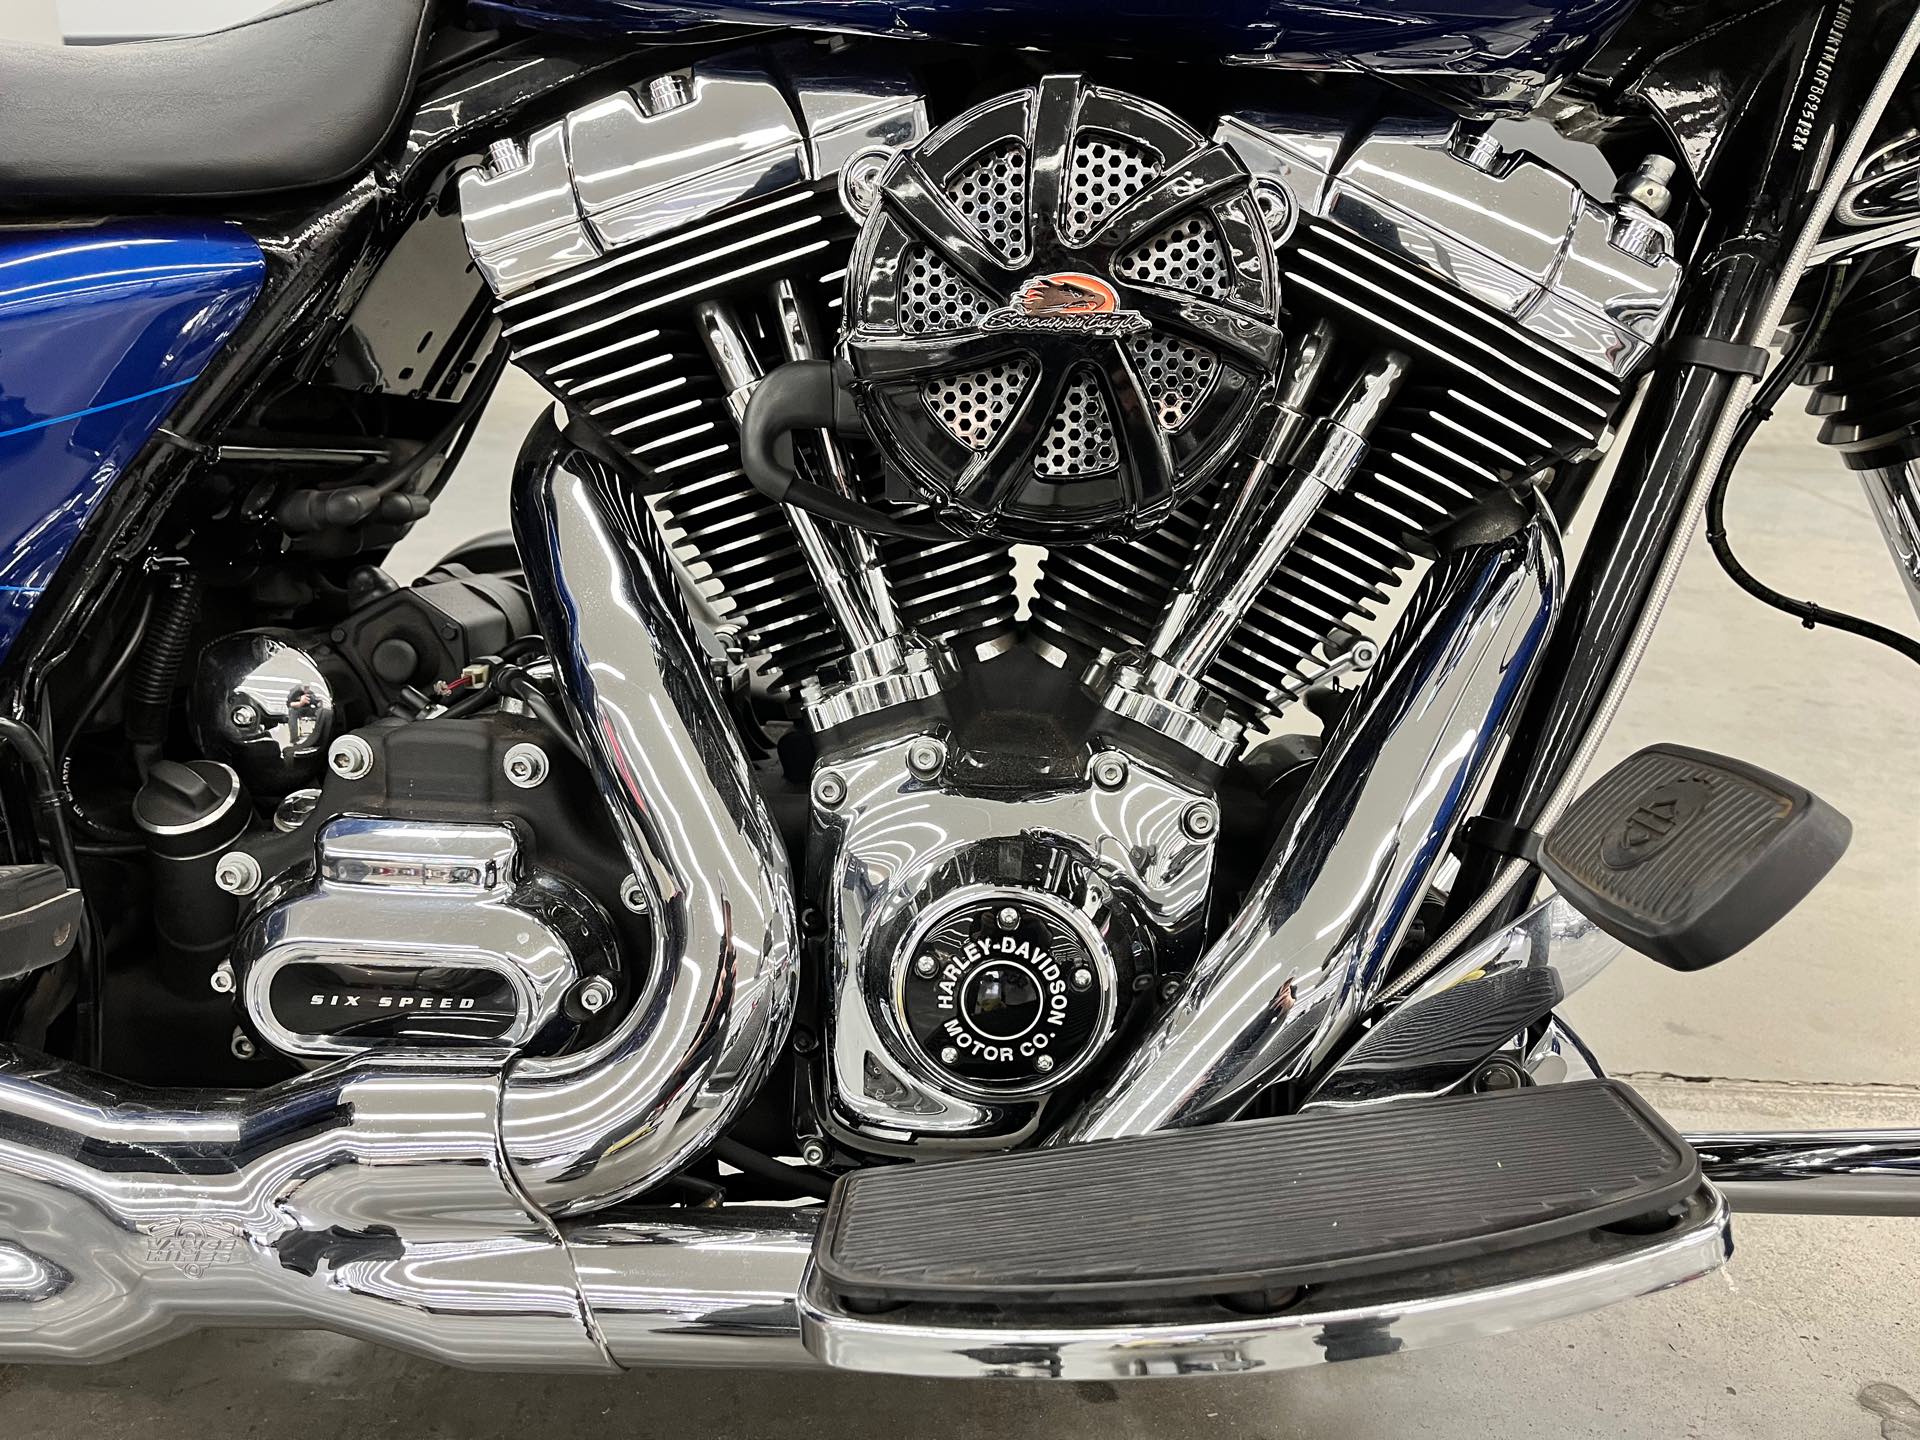 2015 Harley-Davidson Road Glide Special at Aces Motorcycles Denver 